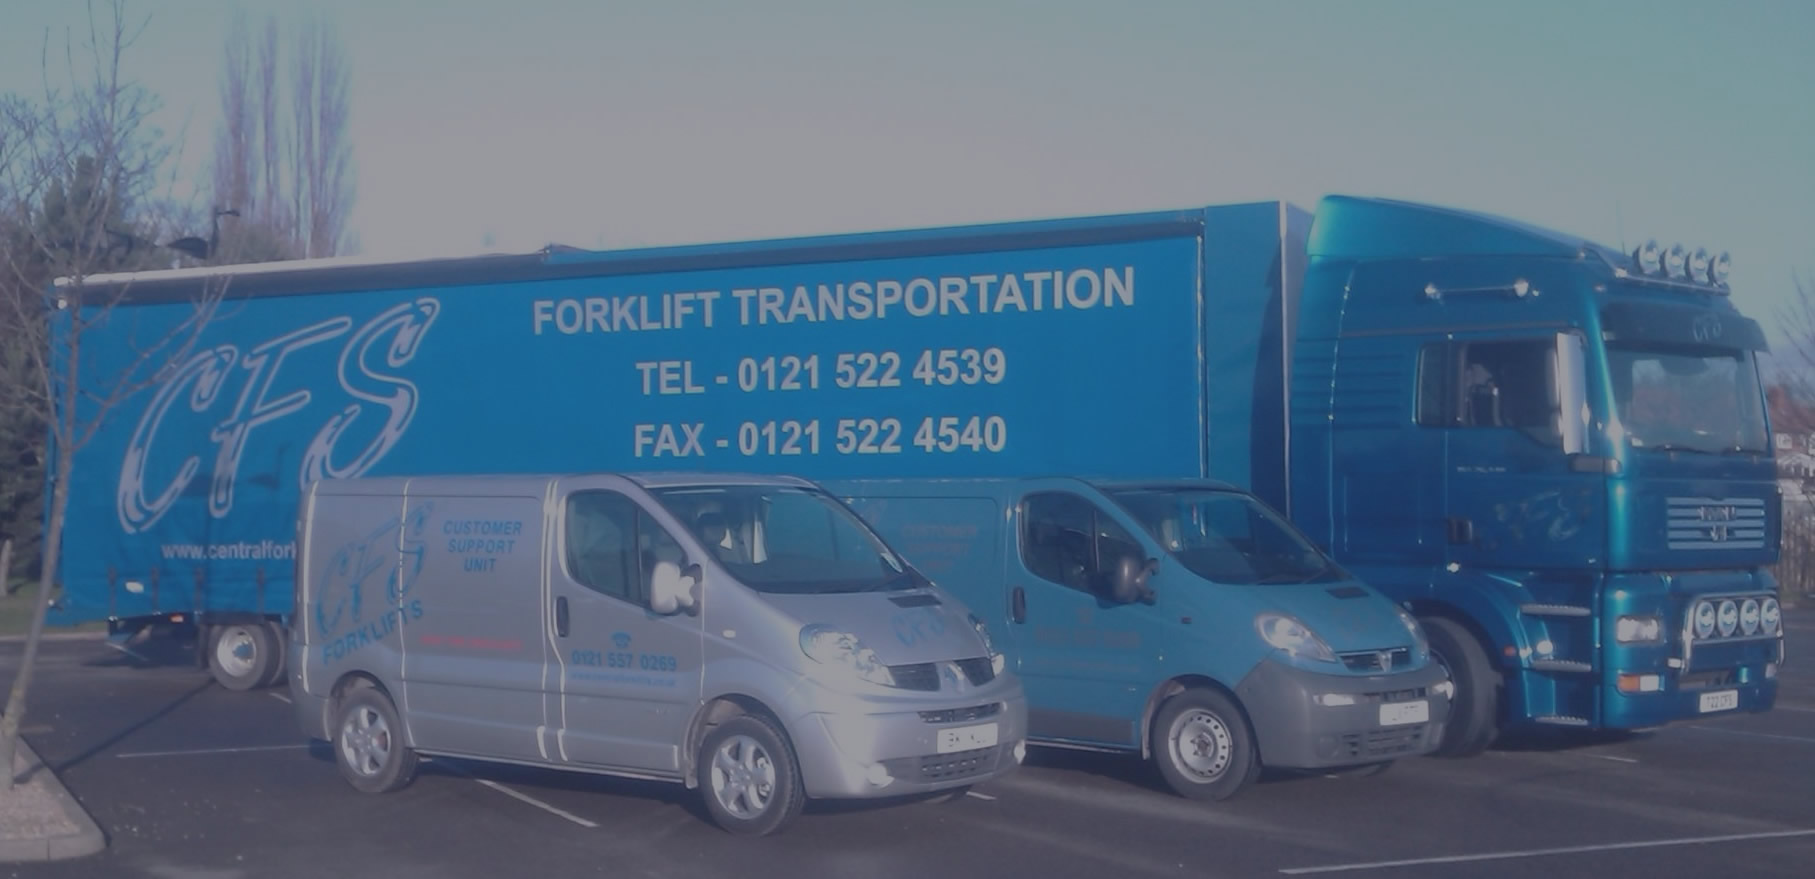 forklift truck hire in birmingham